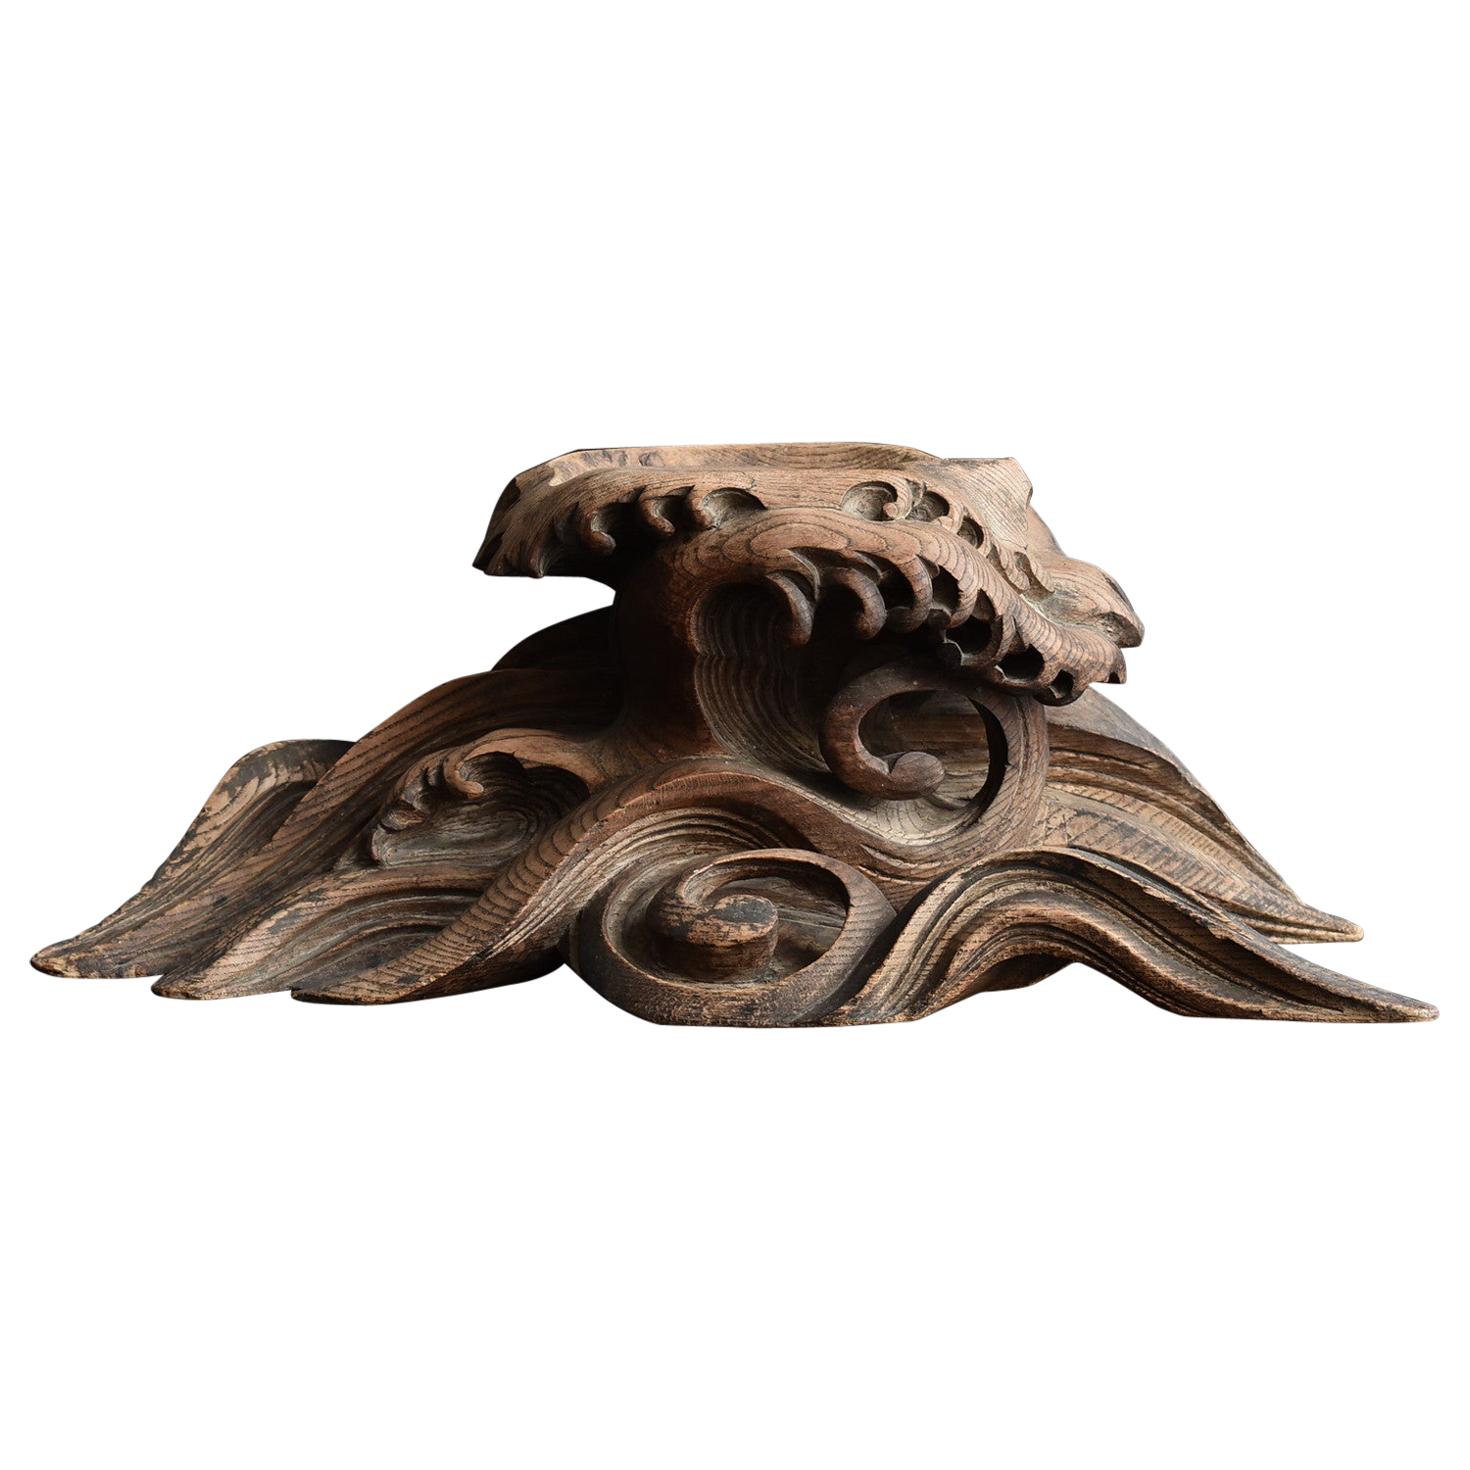 Japanese Antique Wood Carving Wavy Figurine / Incense Burner / Decoration Stand